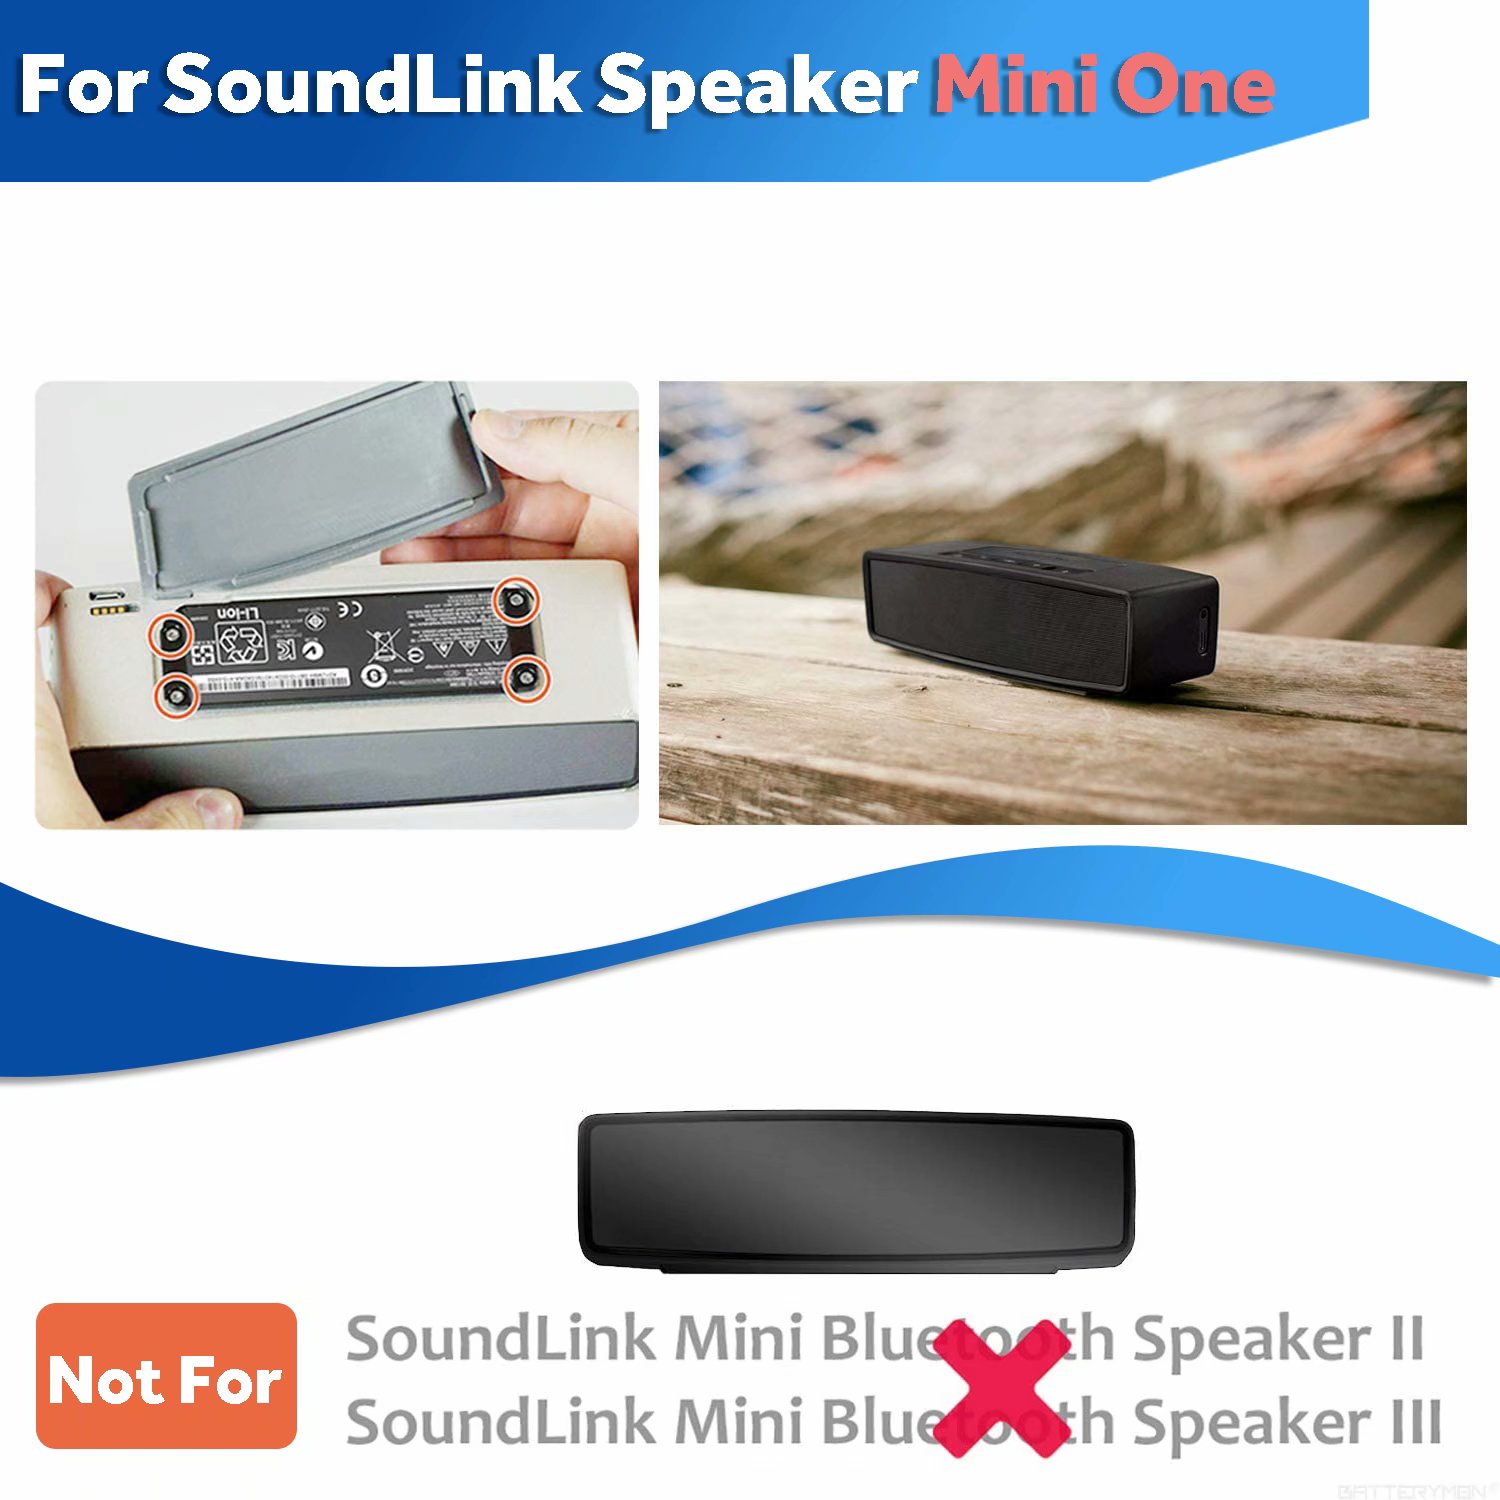 Zmoon 061384 061385 061386 063287 Battery for Boses SoundLink SoundLink Bluetooth Speaker Mini One (7.4V 21.46Wh 2900mAh) - image 3 of 9